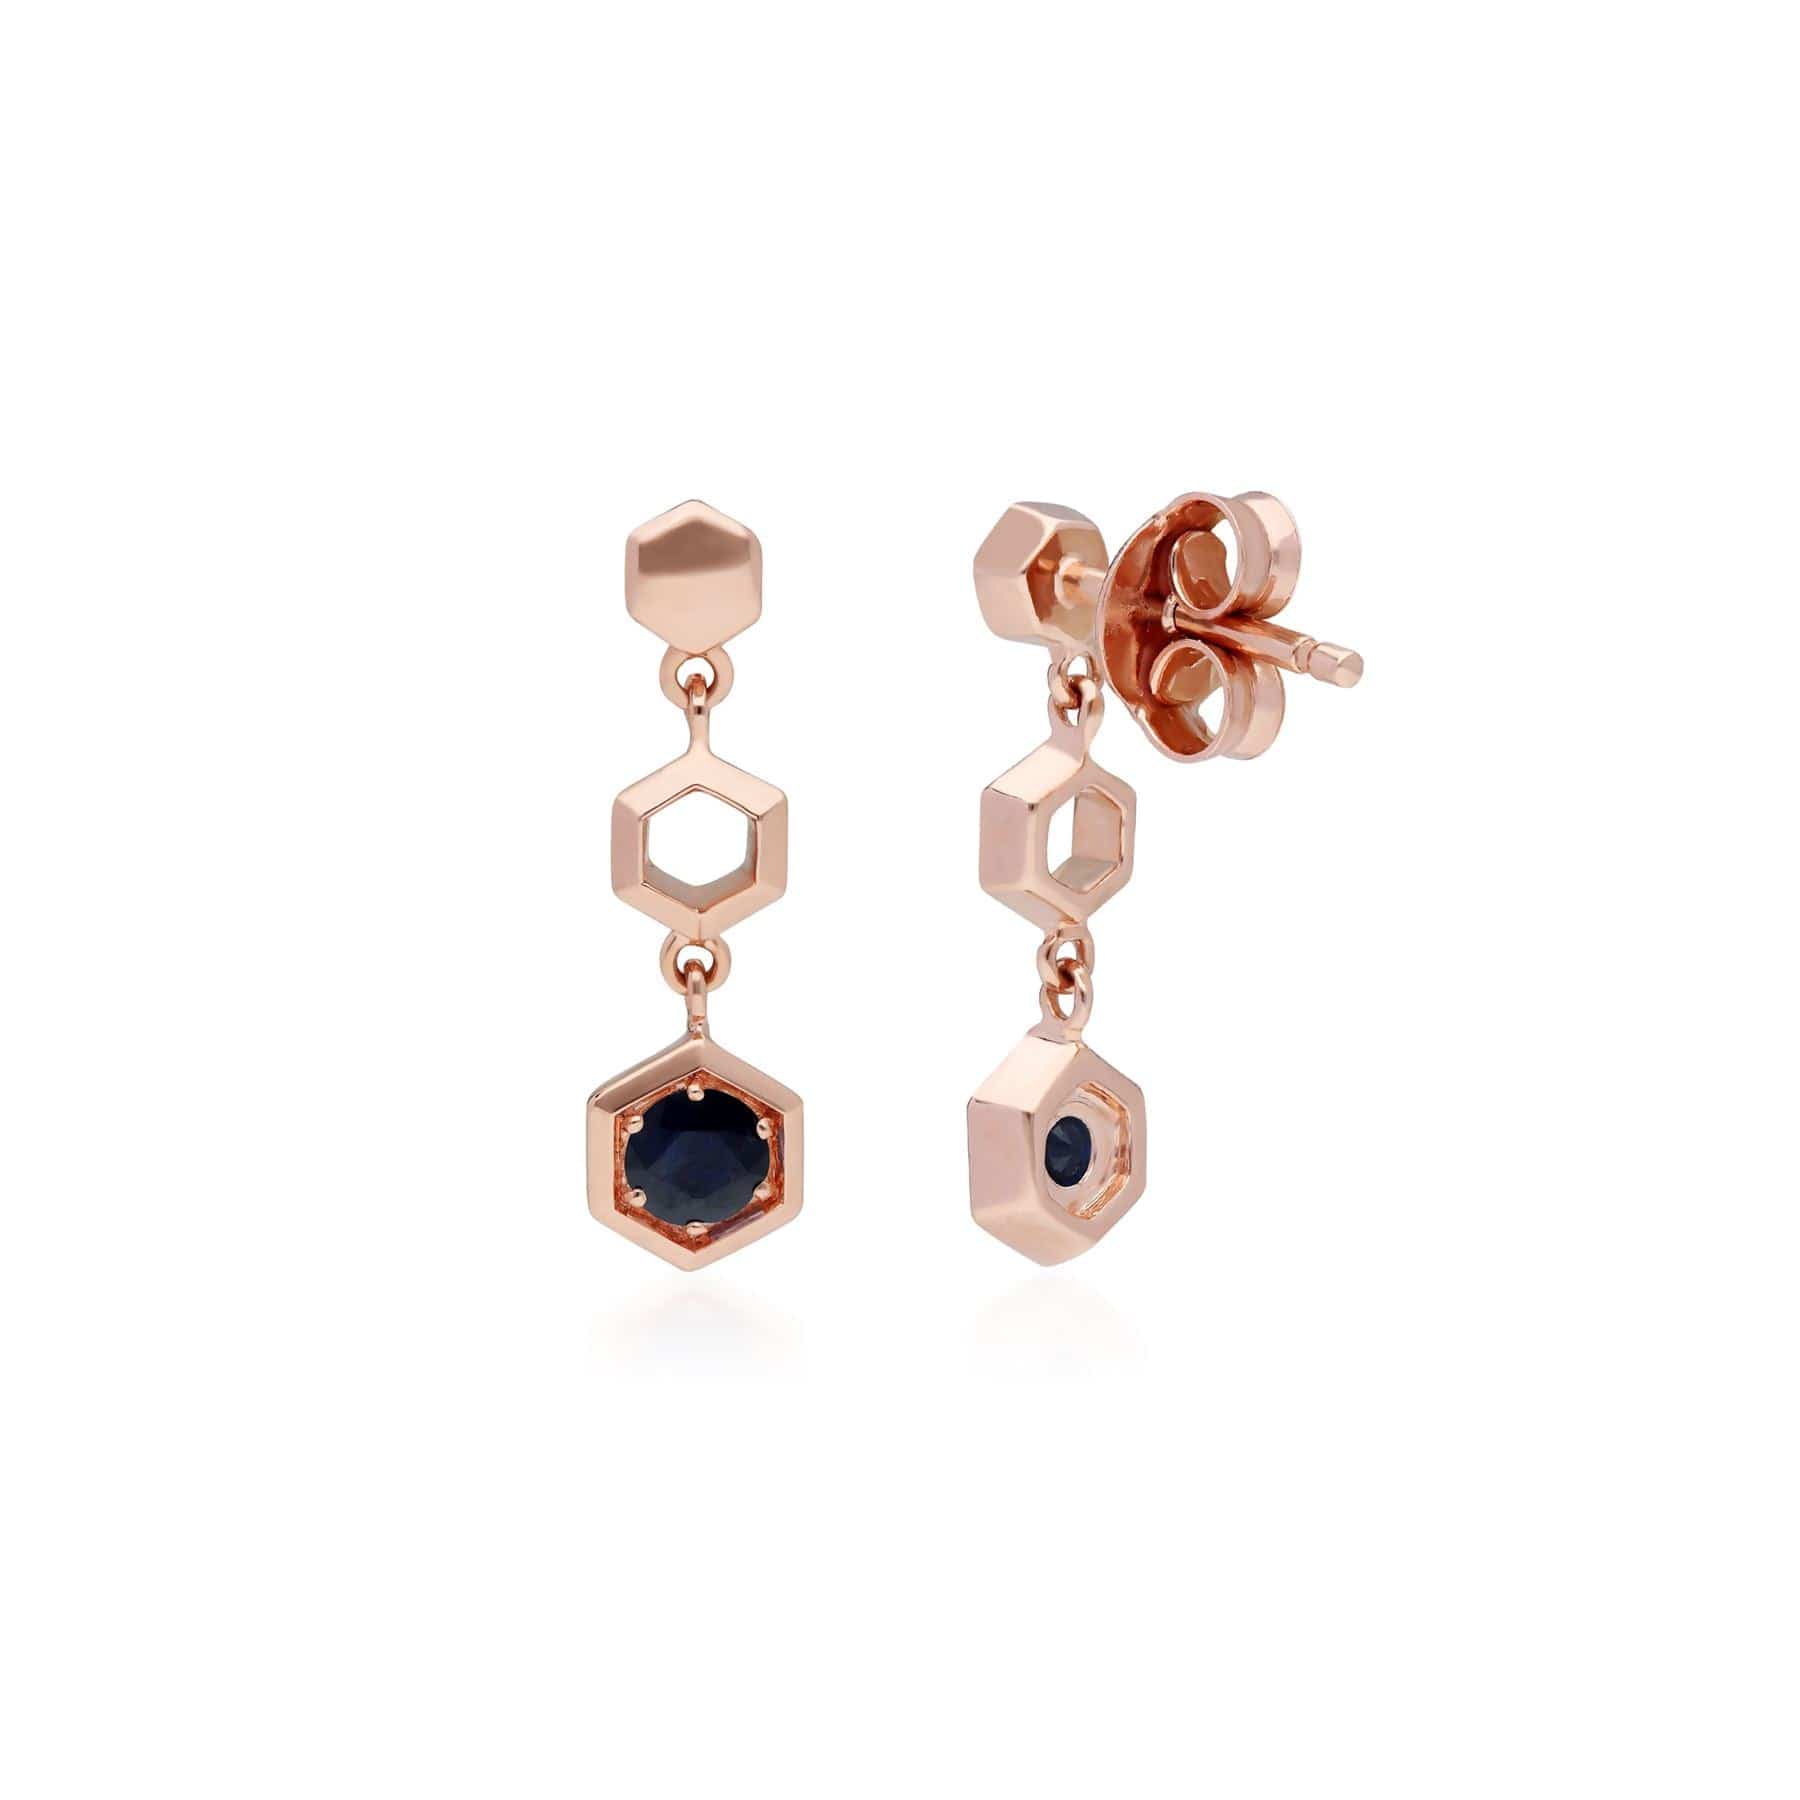 Honeycomb Inspired Blue Sapphire Drop Earrings in 9ct Rose Gold - Gemondo